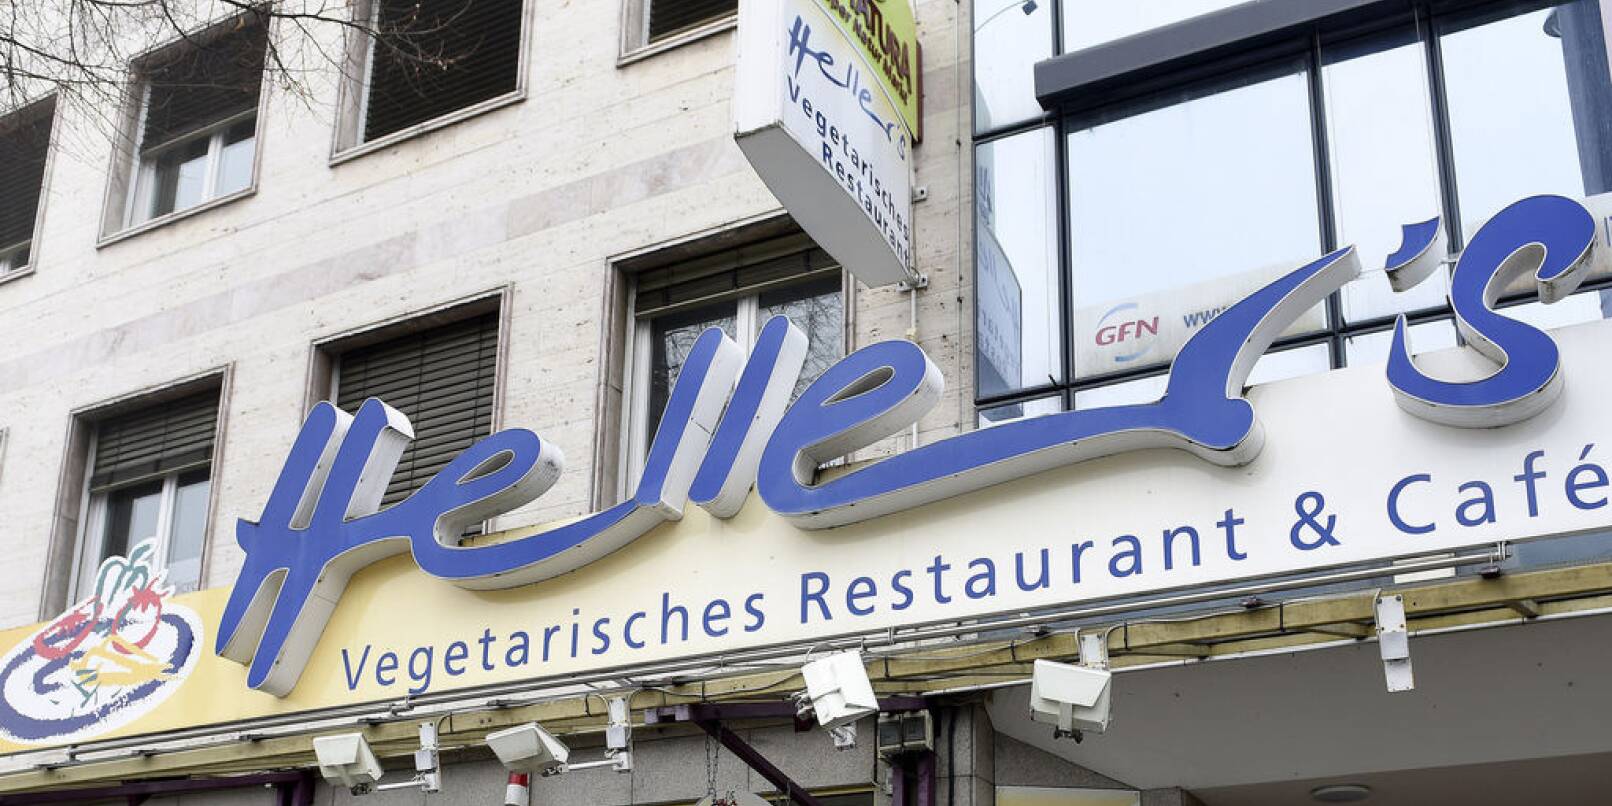 Heller's Restaurant im Mannheimer Quadrat N7 ist ein Traditionslokal.